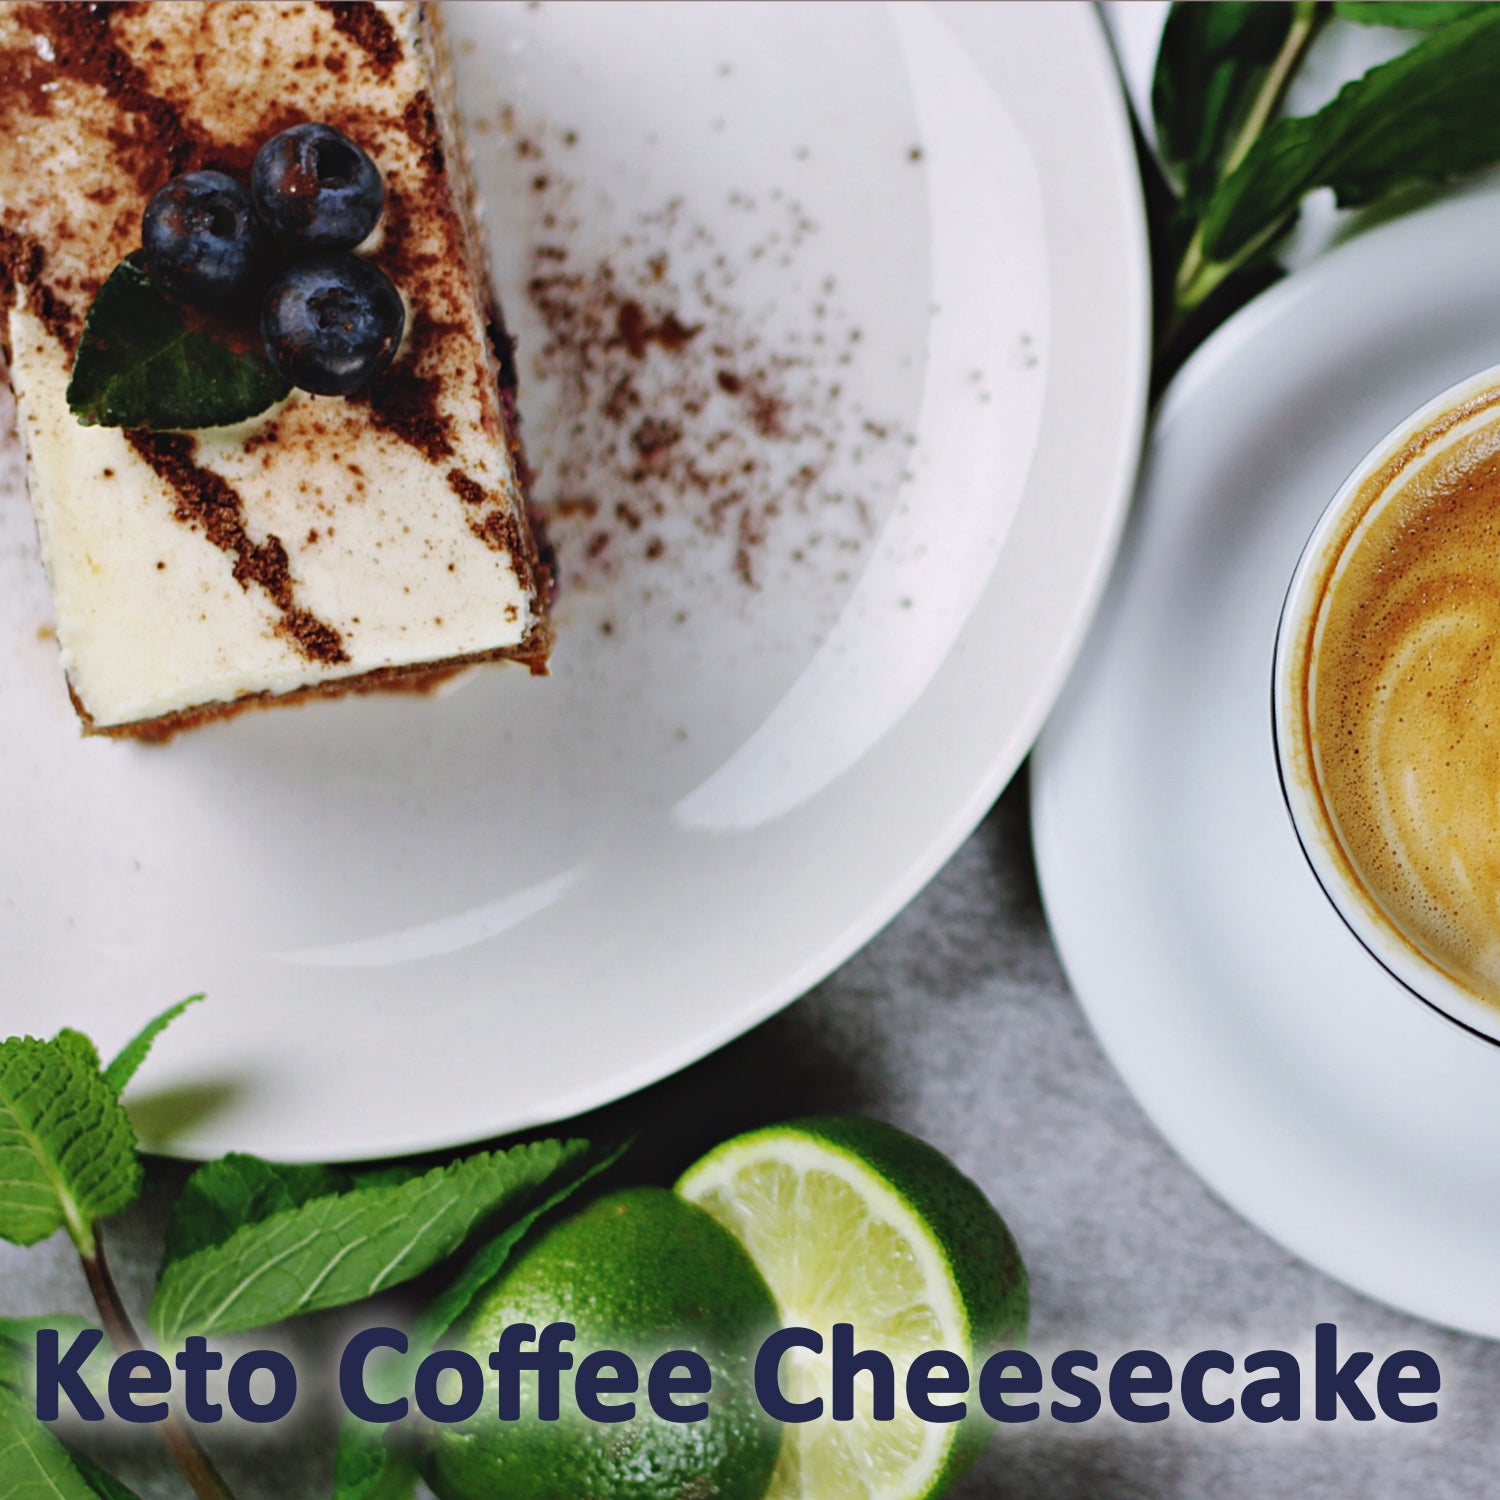 Keto Coffee Cheesecake recipe